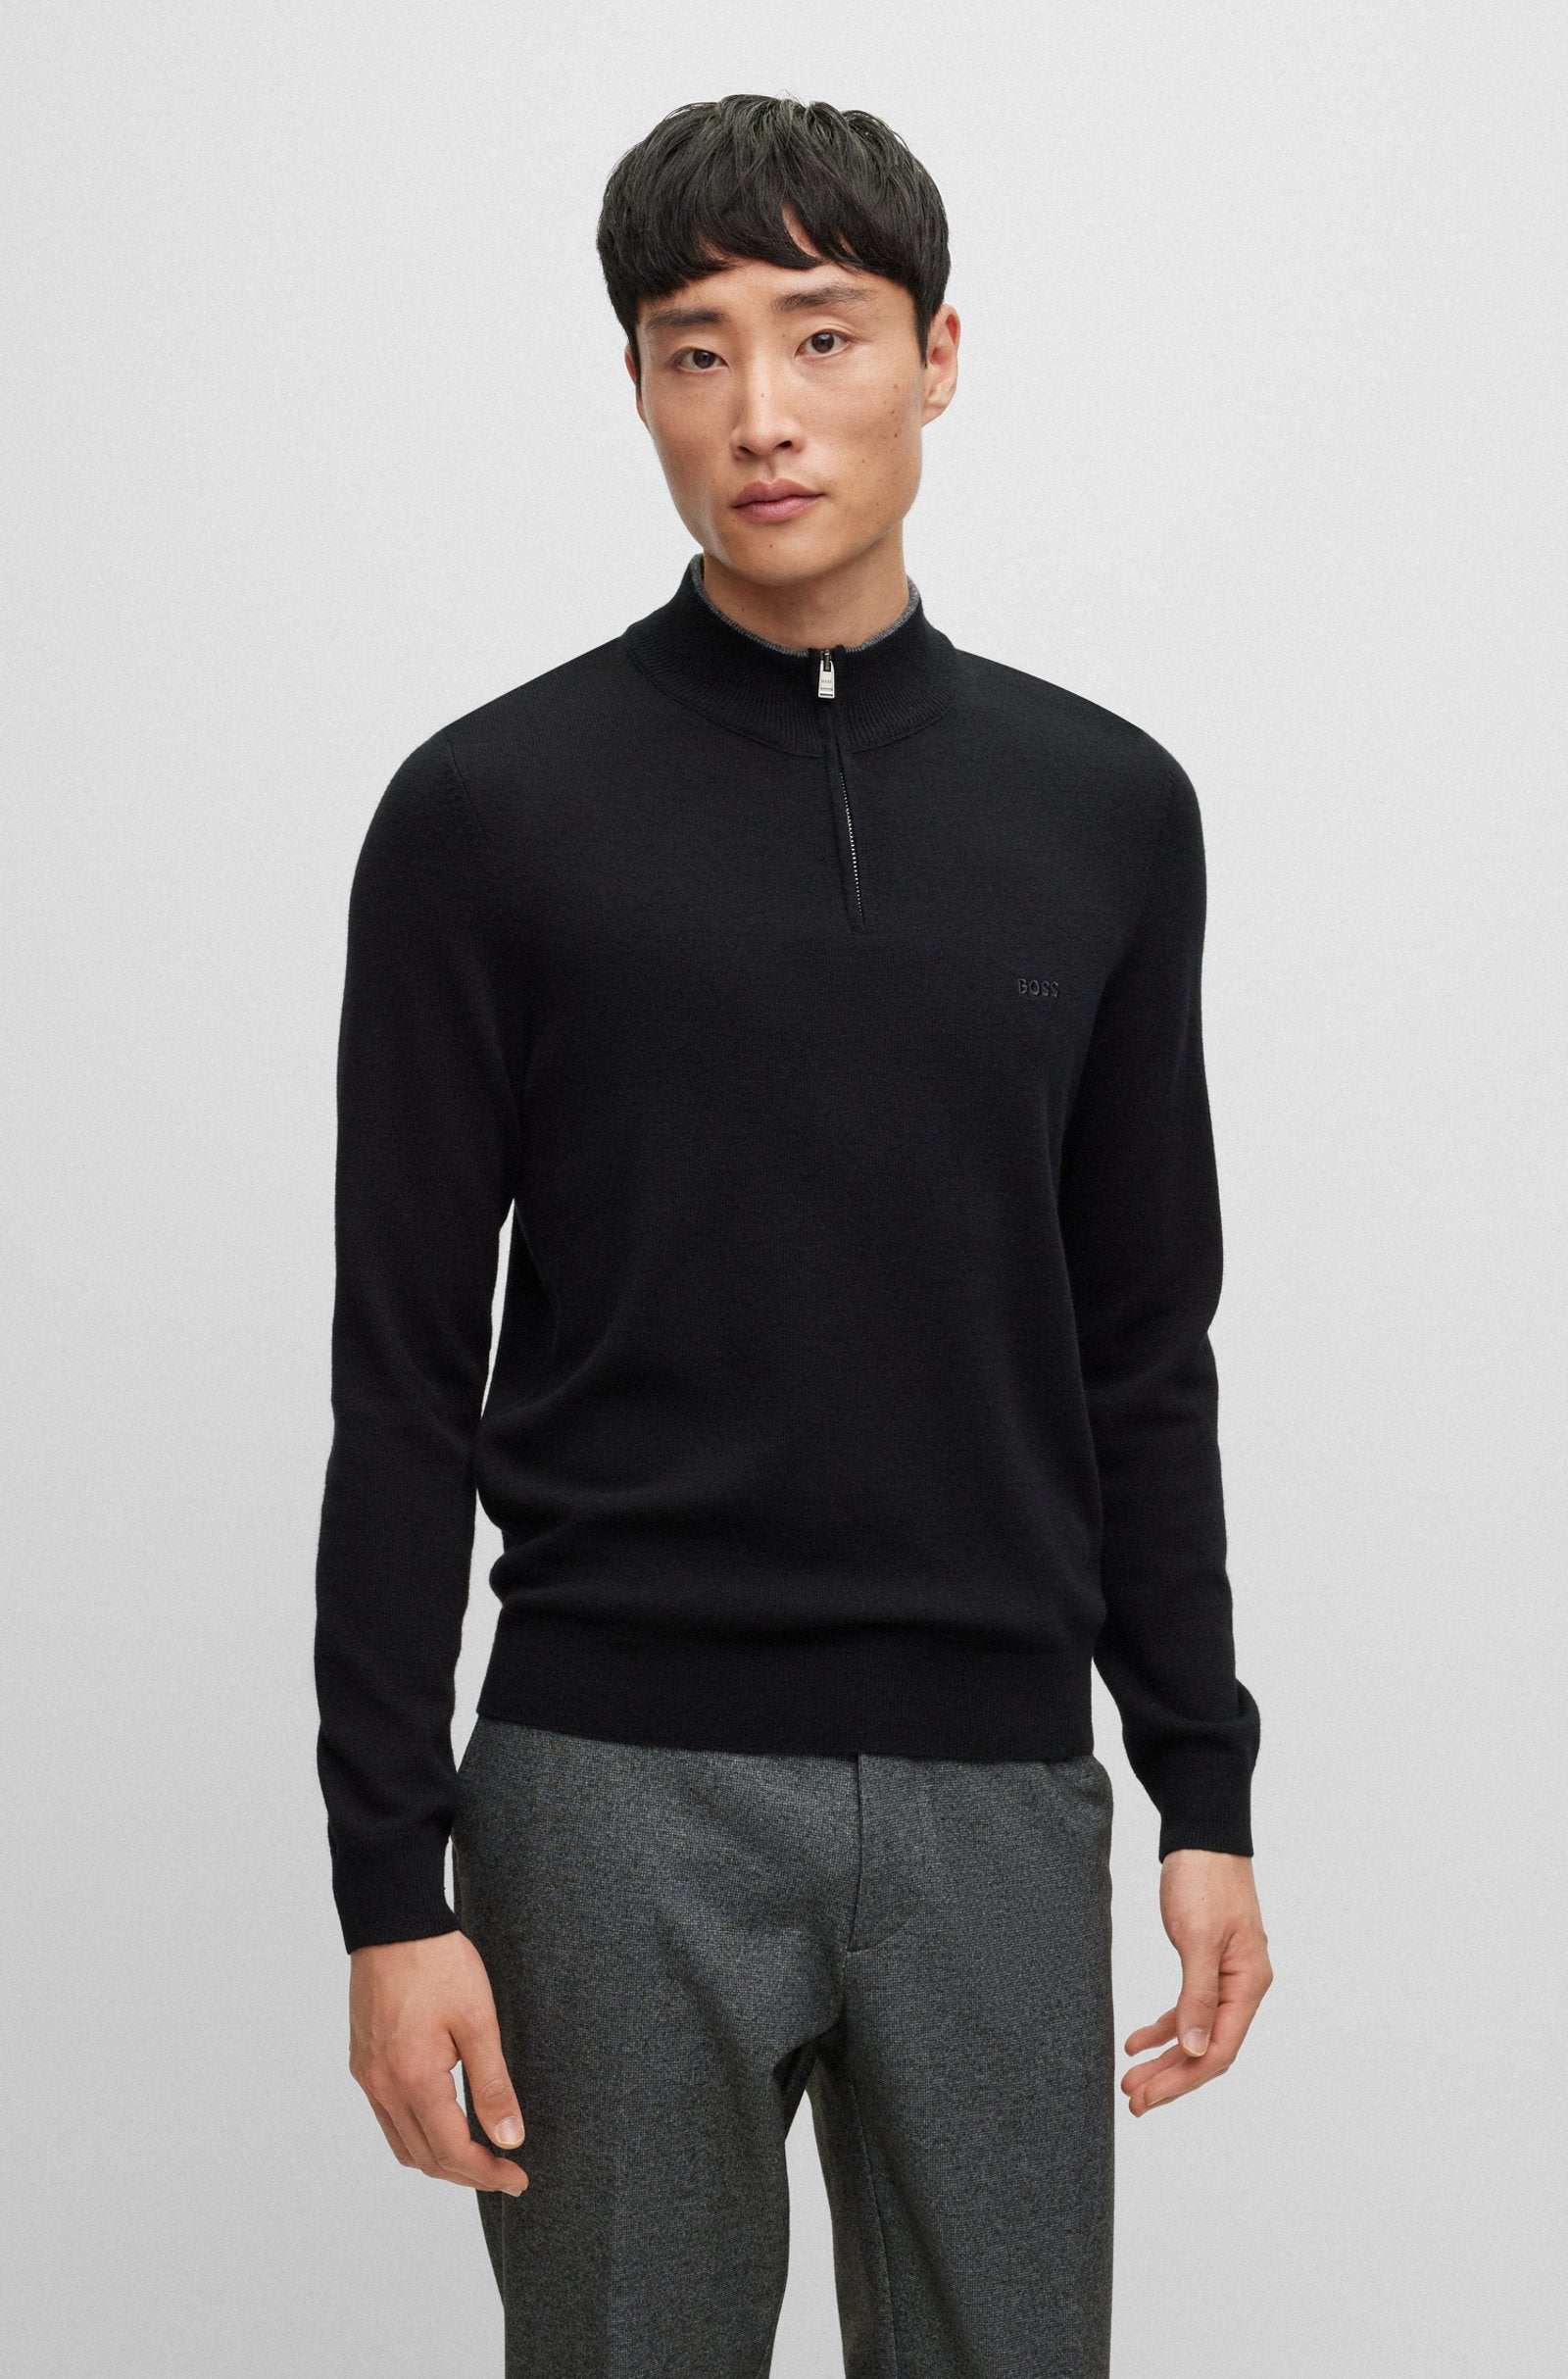 BOSS Black Marlo Sweater 001 Black